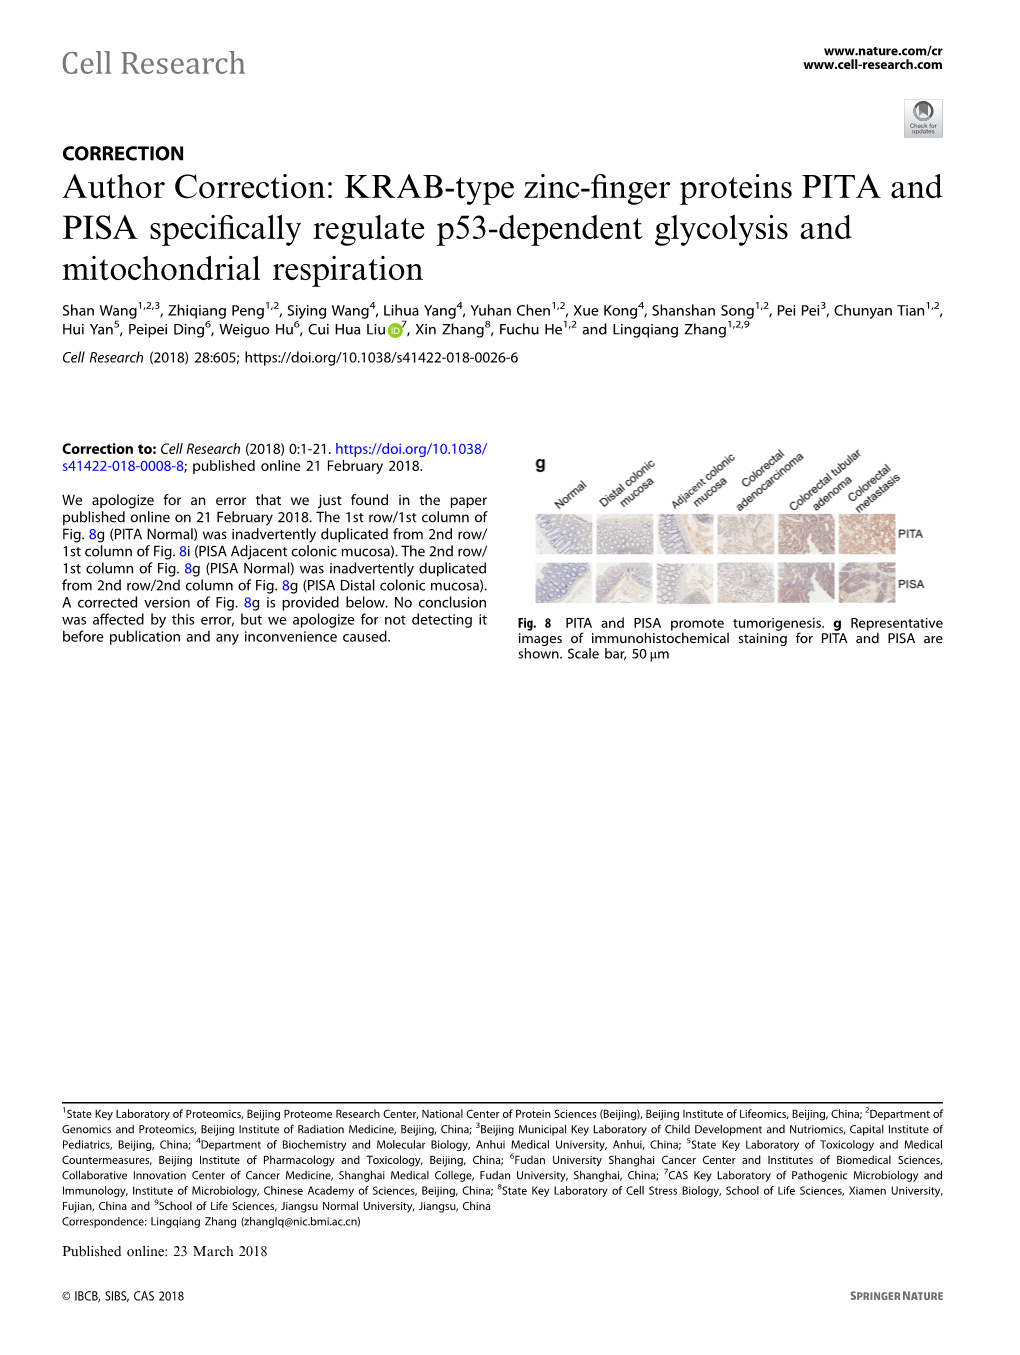 Author Correction: KRAB-Type Zinc-Finger Proteins PITA and PISA